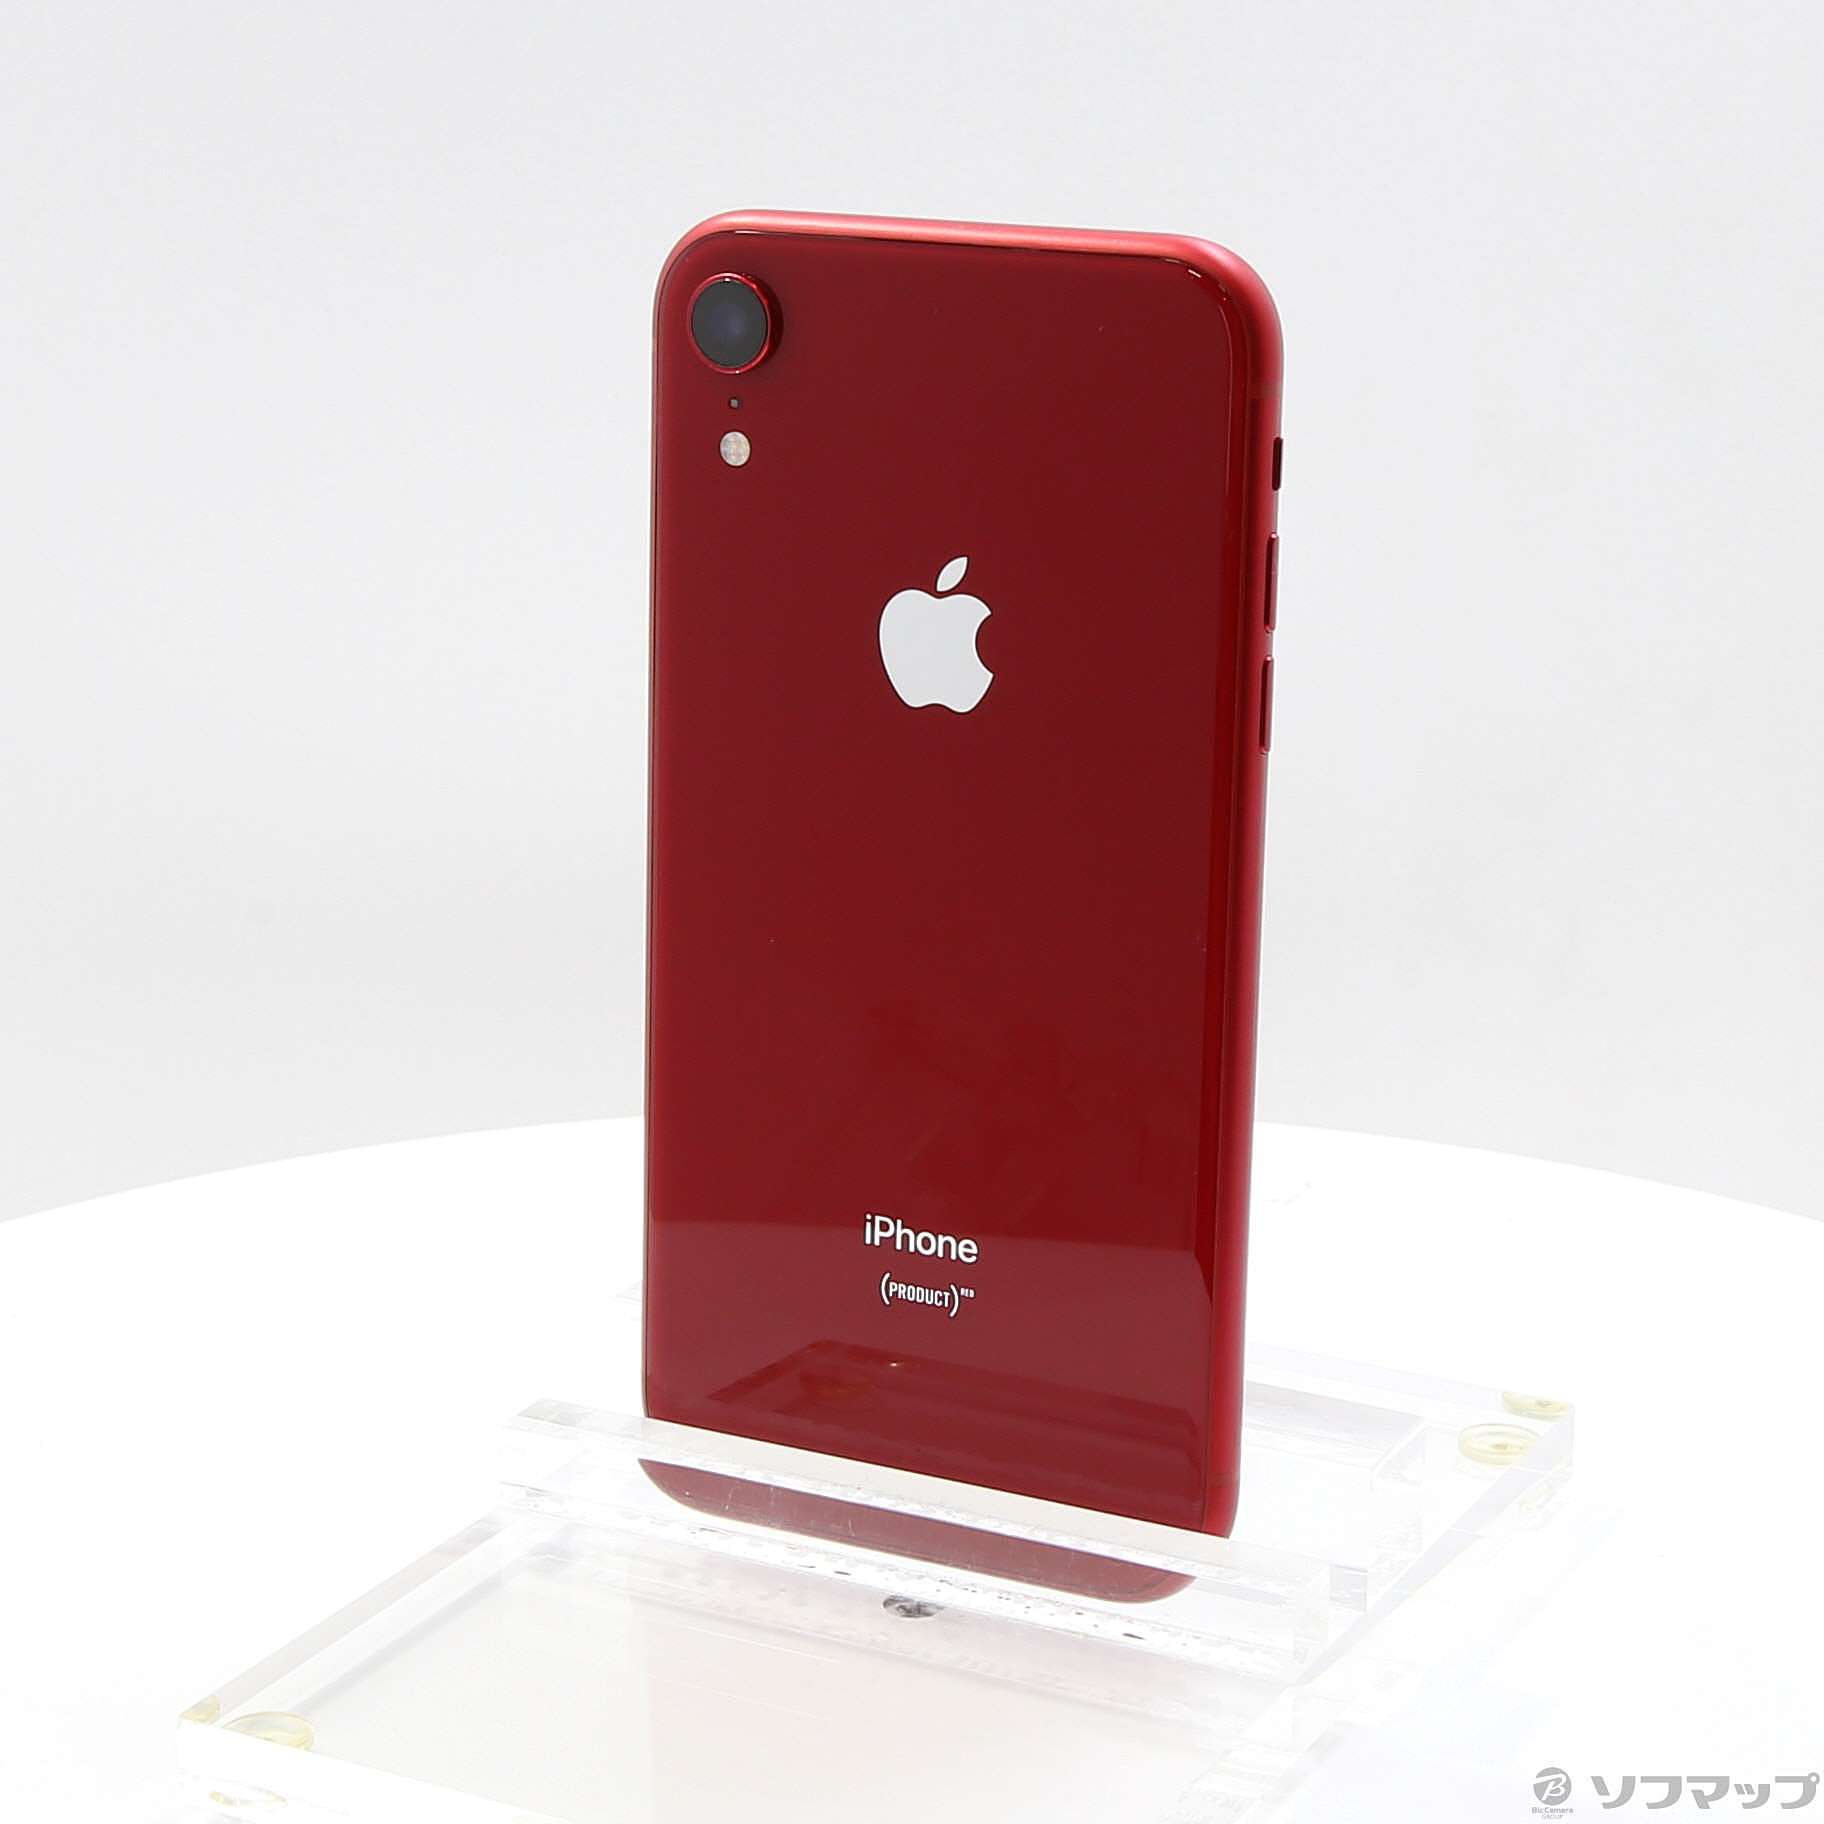 iPhone XR (PRODUCT)RED 128GB SIMフリー [レッド] 中古(白ロム)価格比較 - 価格.com